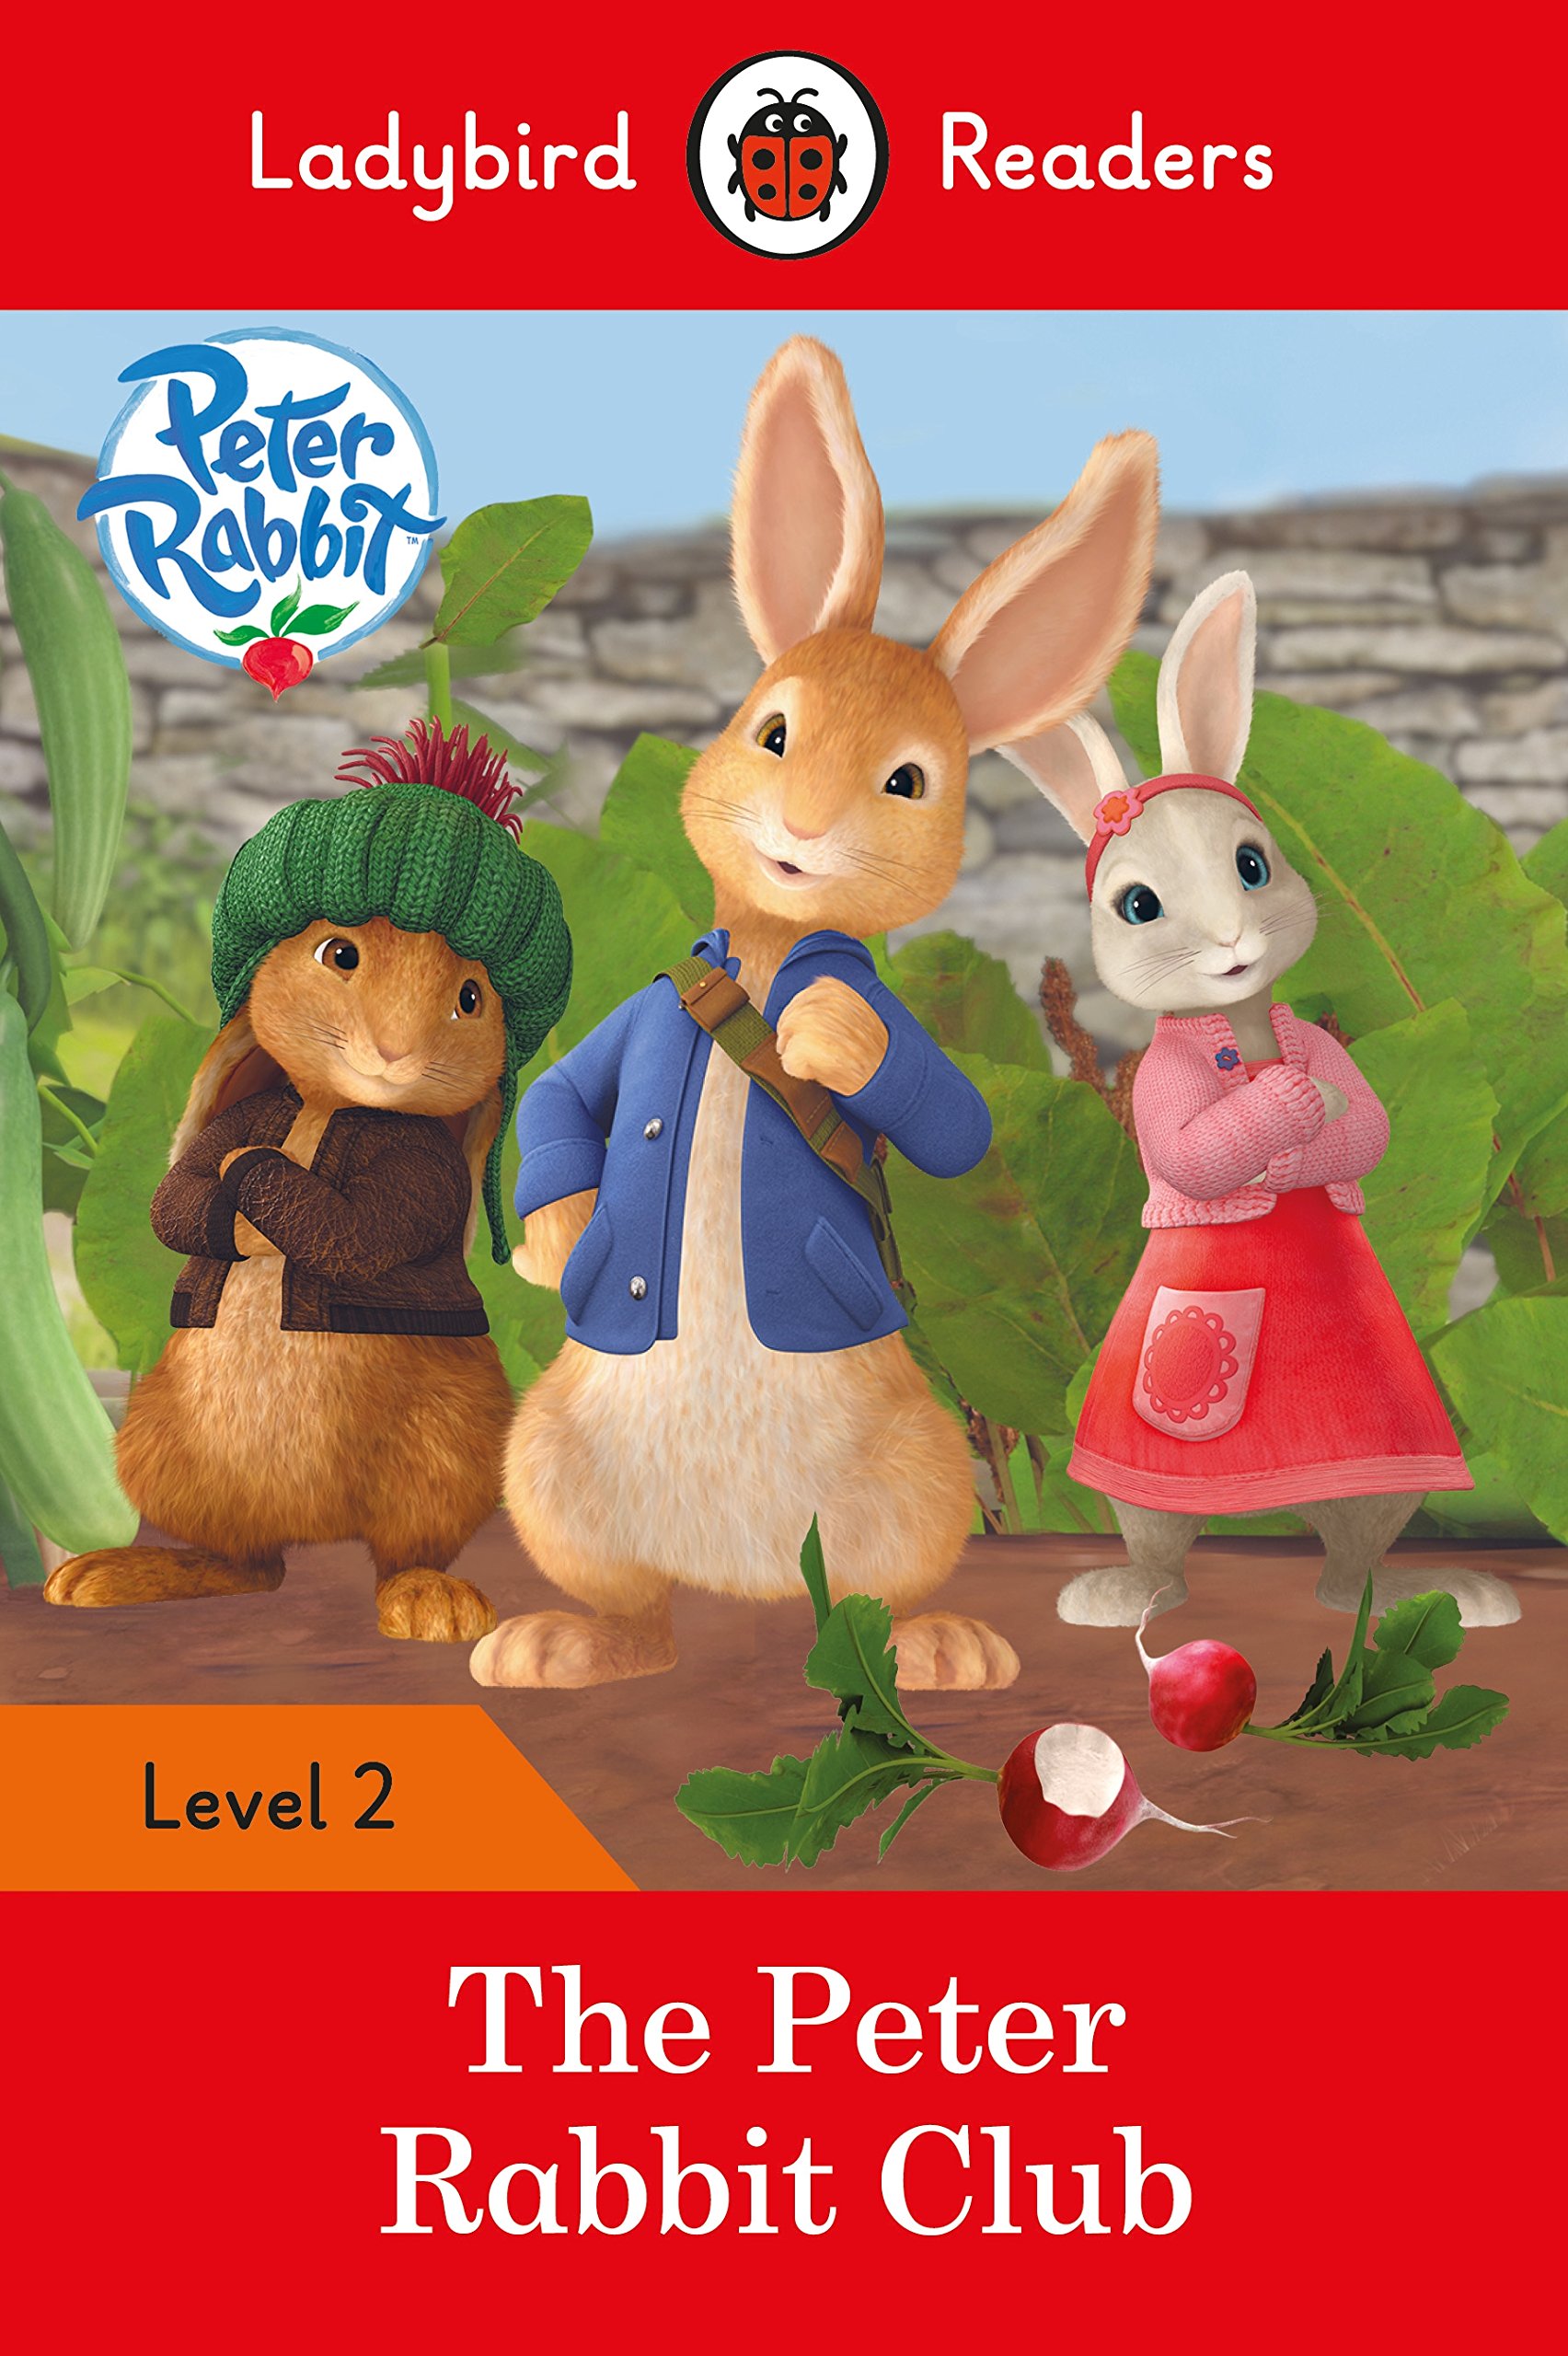 Ladybird Readers Level 2 : Peter Rabbit - The Peter Rabbit Club